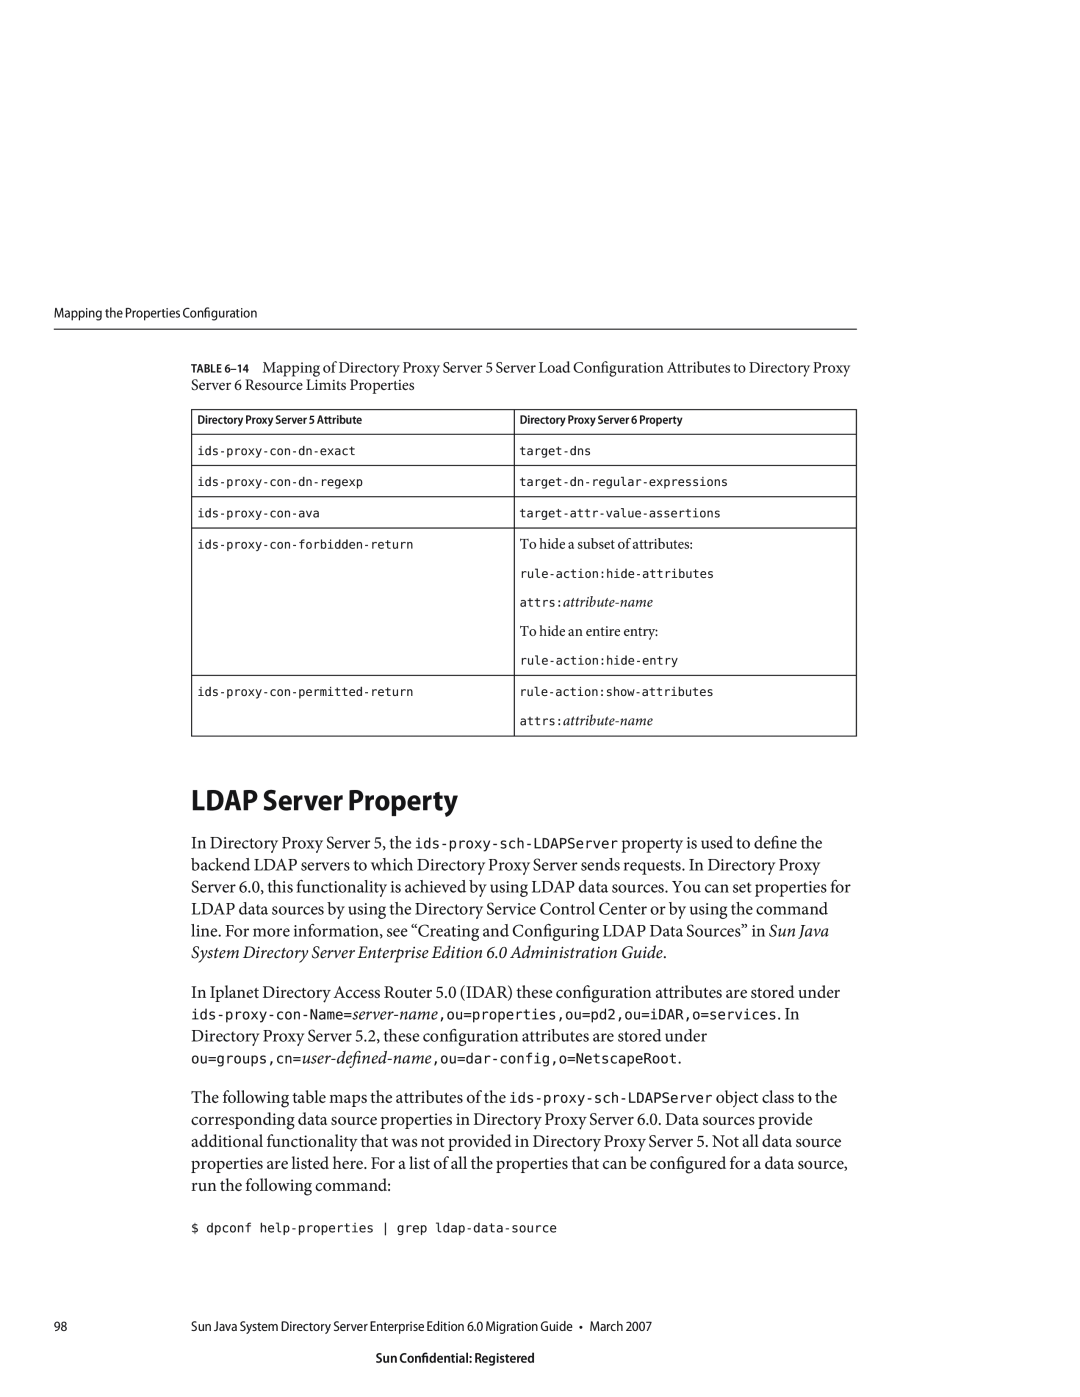 Sun Microsystems 8190994 manual LDAP Server Property, $ dpconf help-properties grep ldap-data-source 